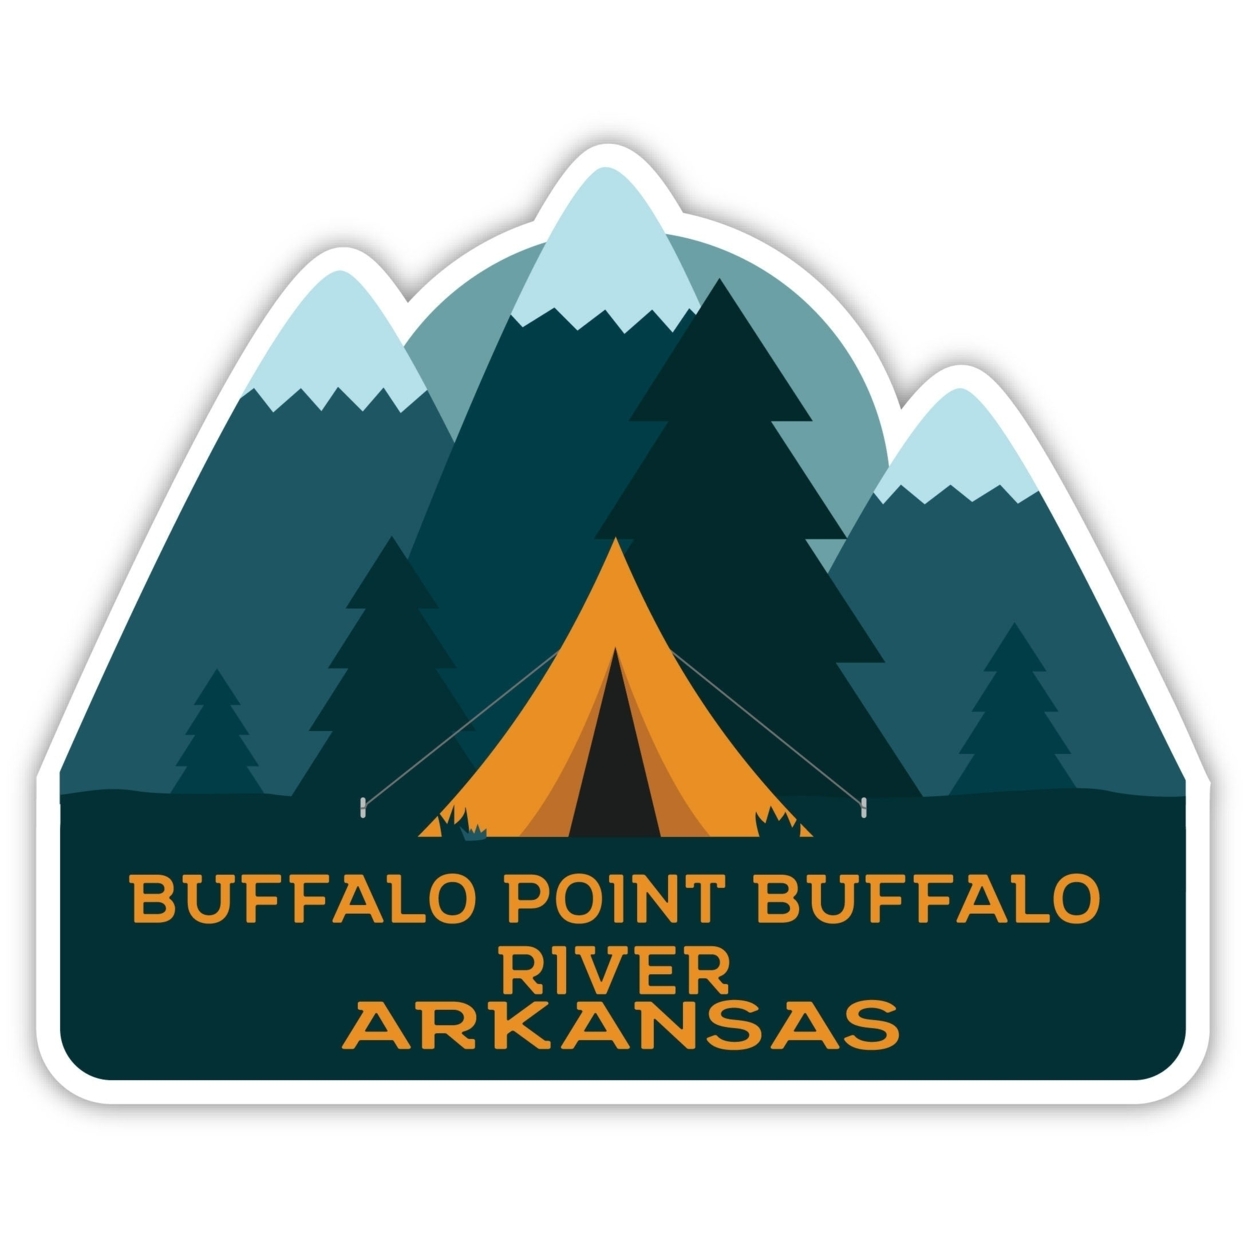 Buffalo Point Buffalo River Arkansas Souvenir Decorative Stickers (Choose Theme And Size) - 4-Pack, 6-Inch, Tent